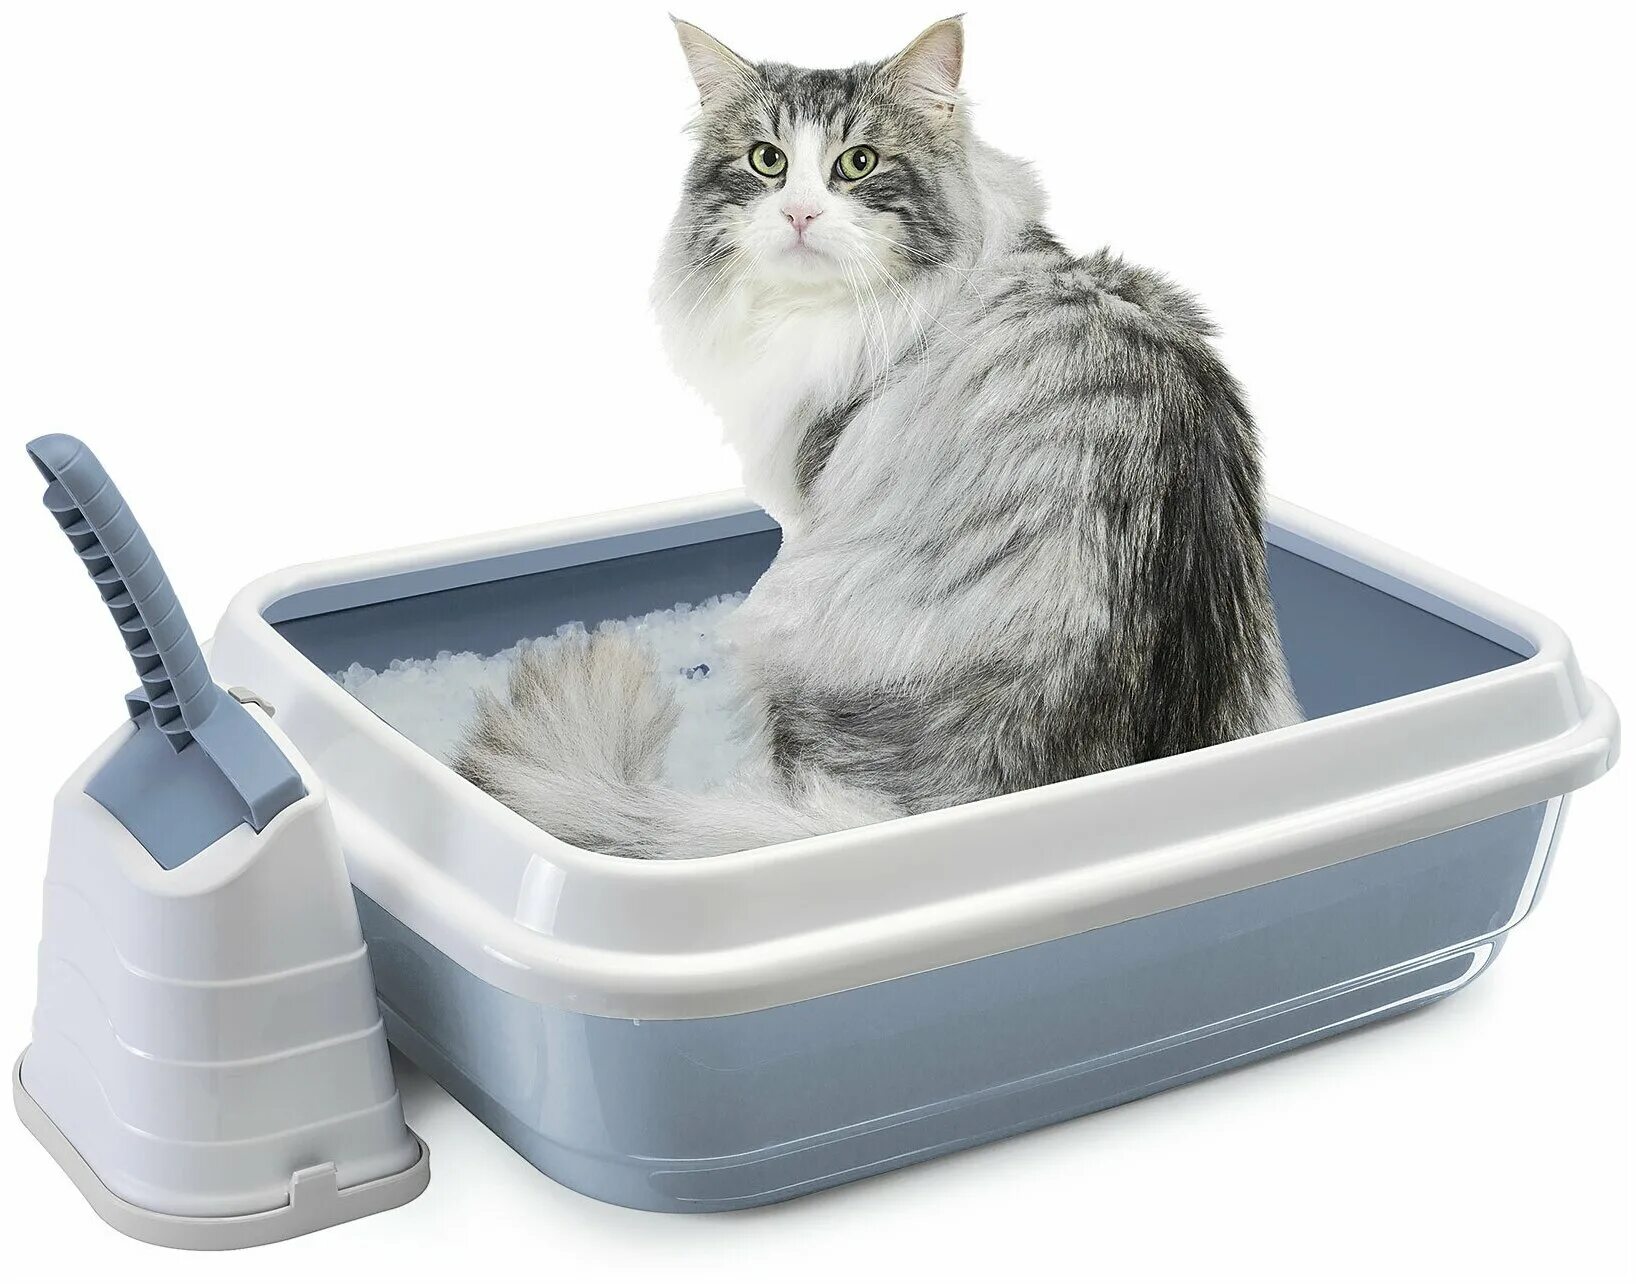 Туалет для кошек. Туалет-лоток для кошек IMAC Duo 59х40х28 см. IMAC туалет-лоток для кошек Duo с совочком на подставке 59х40х28h см, голубой. Туалет-лоток для кошек MPS Gemini 42х28х9 см. Лоток для кошек Savic 59на 40.